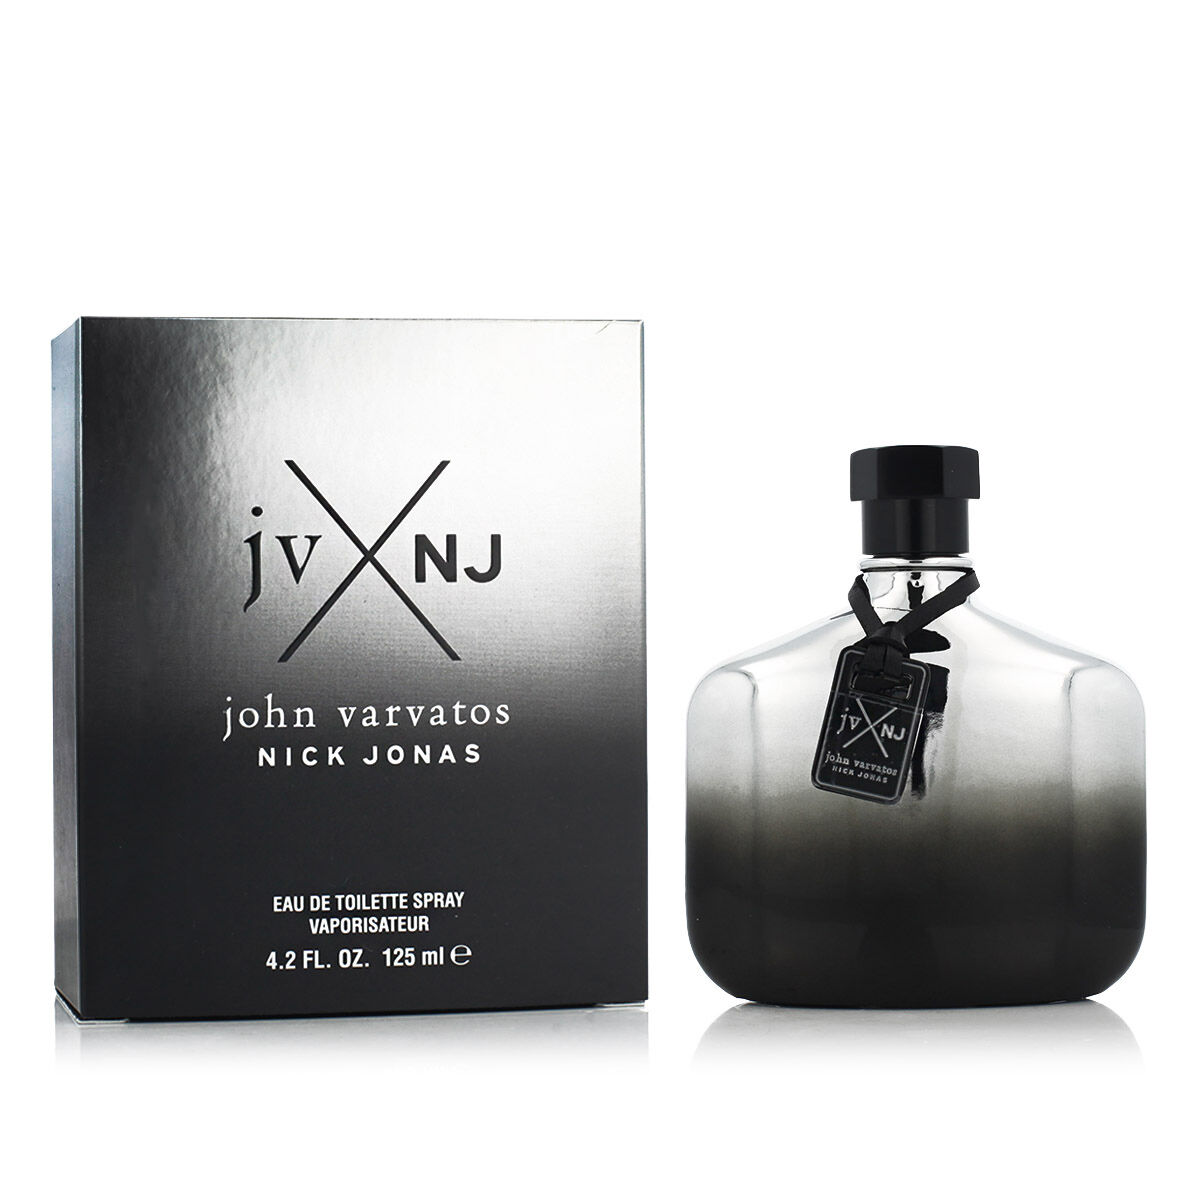 Parfum Homme John Varvatos EDT JV x NJ Silver 125 ml